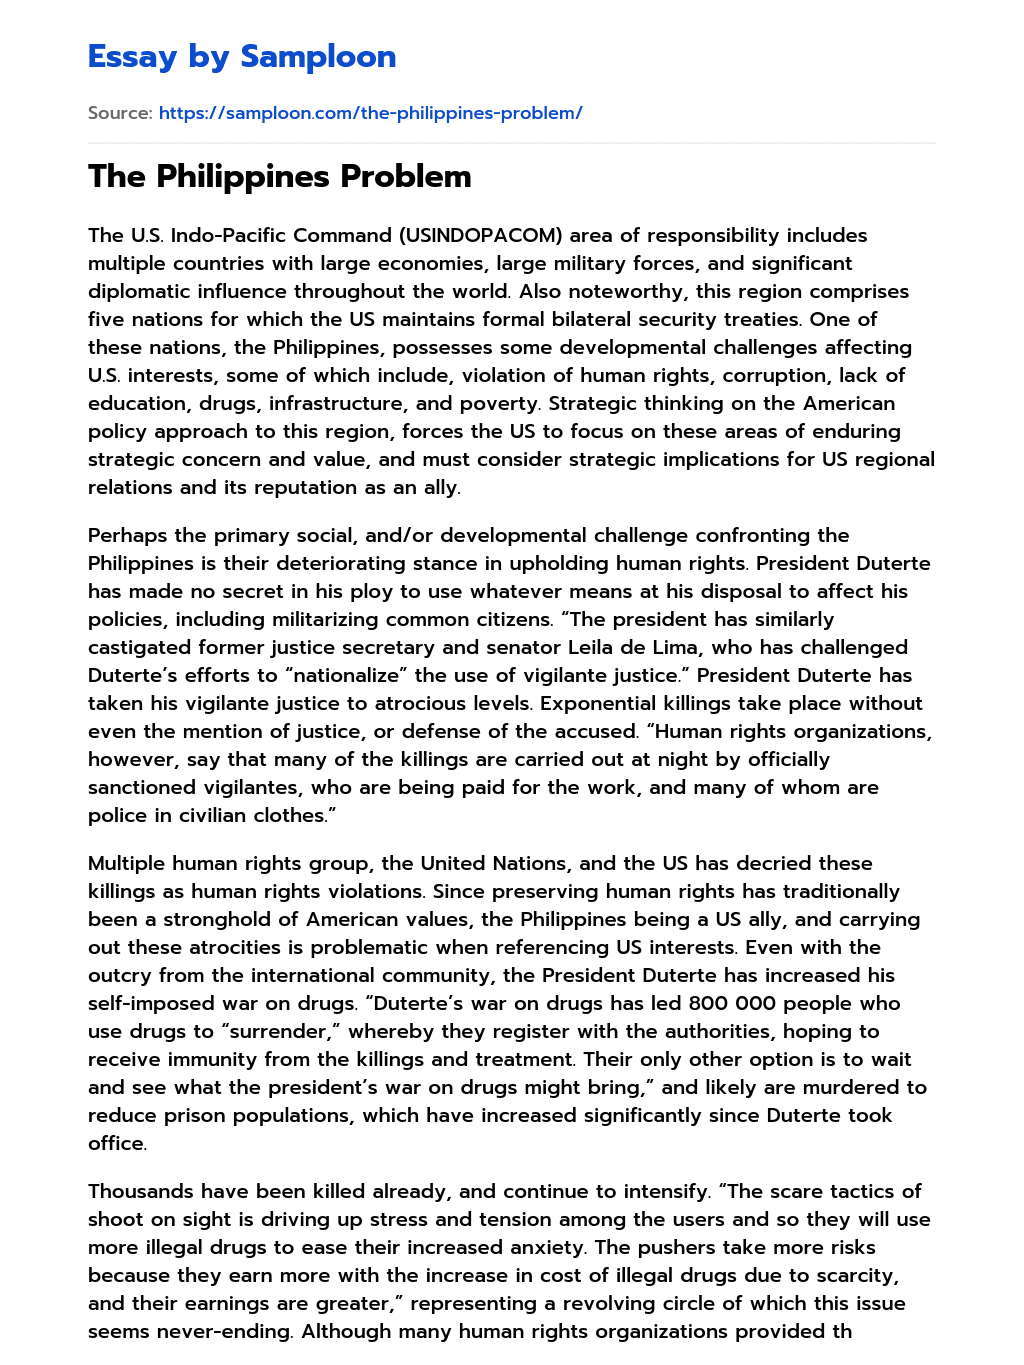 The Philippines Problem essay